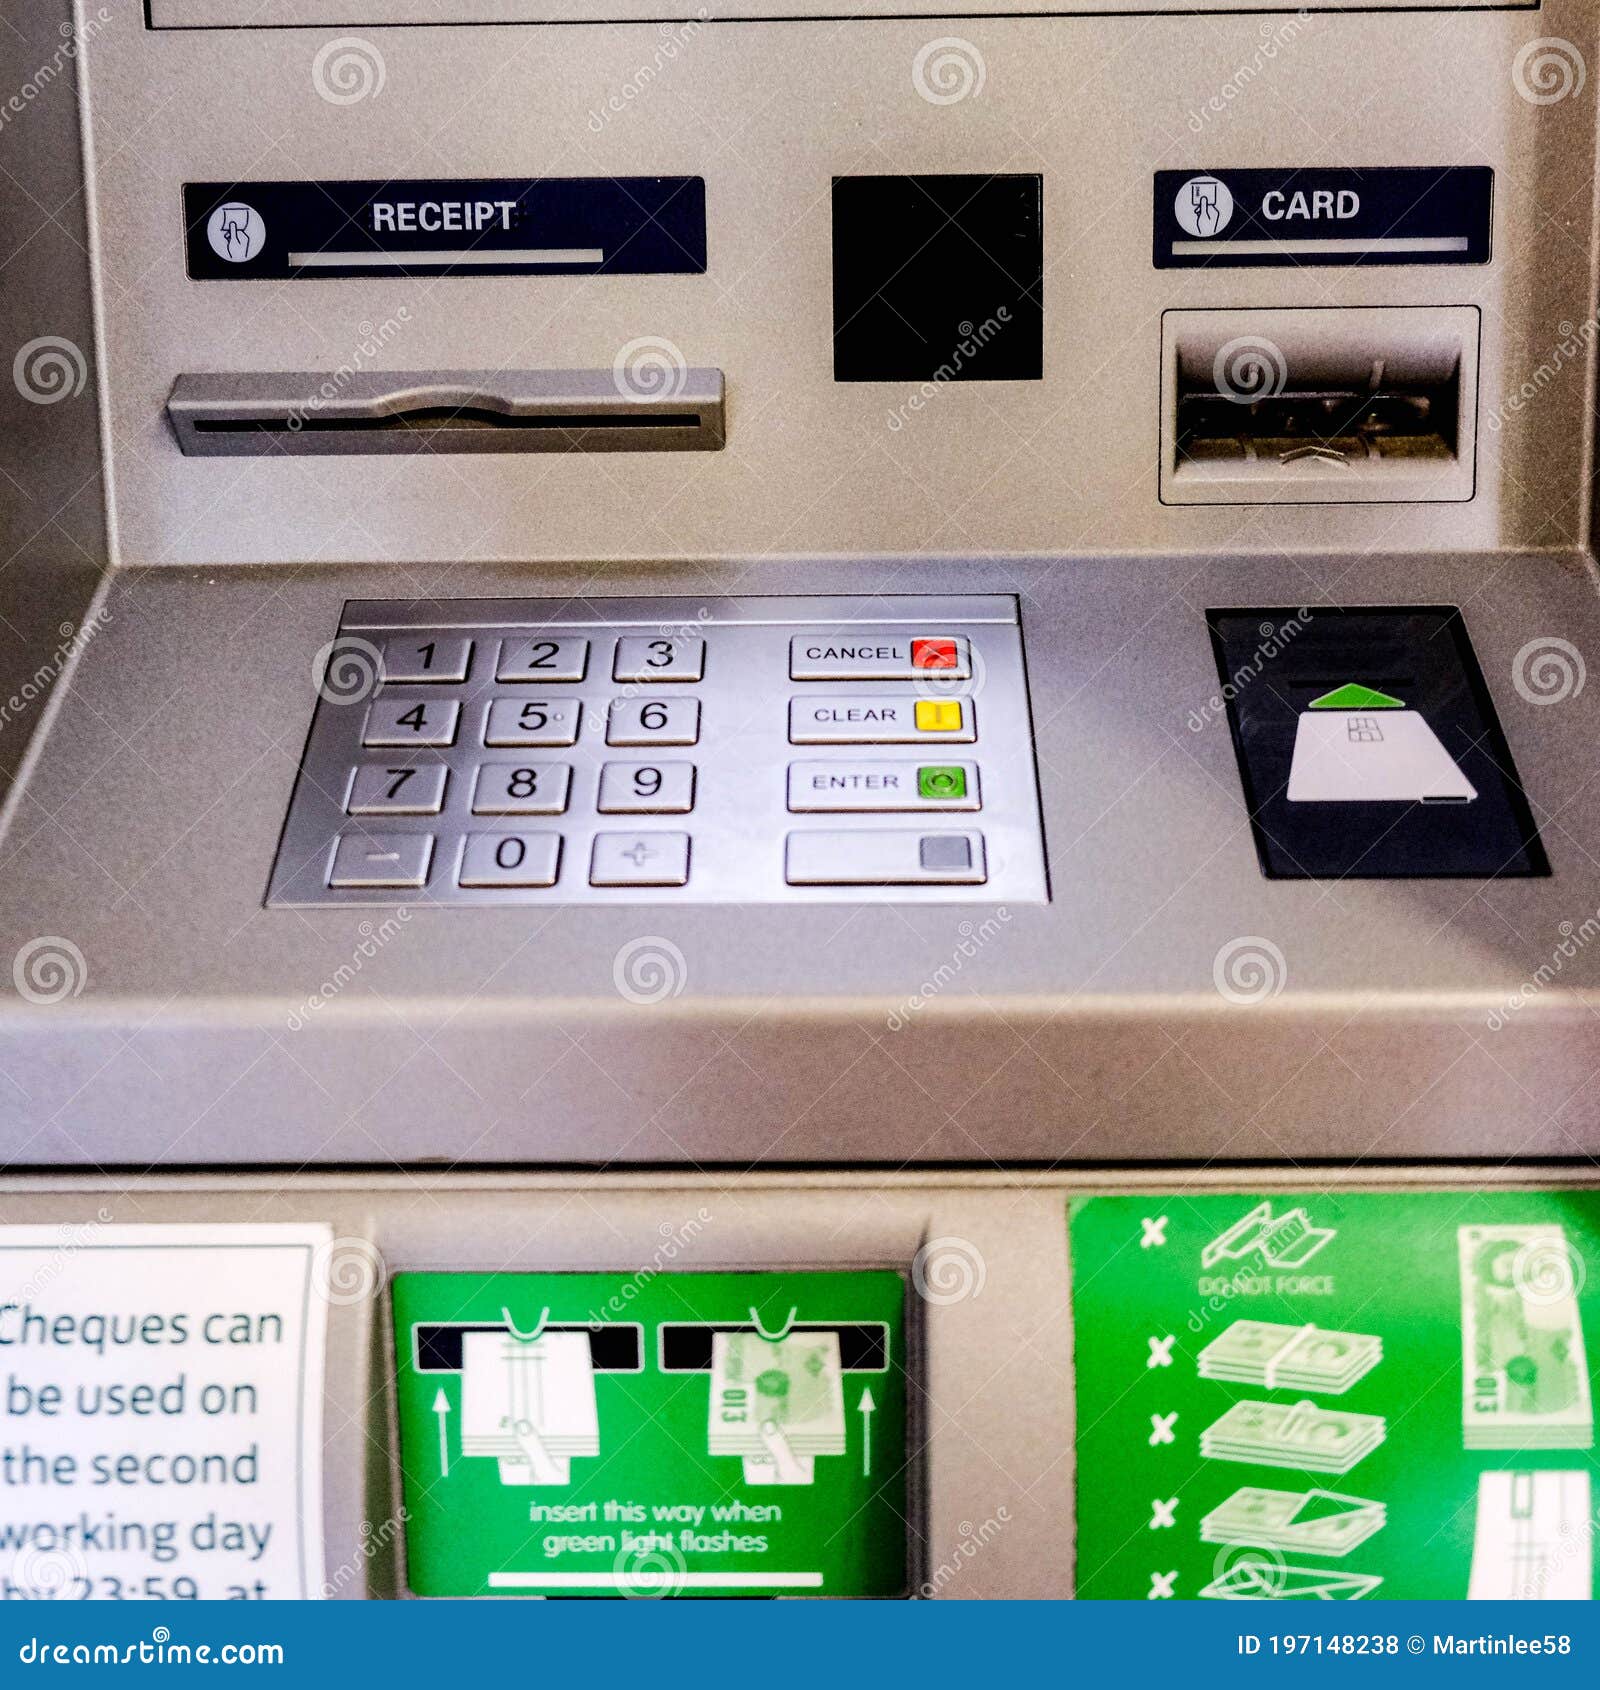 Cash deposit machine near me